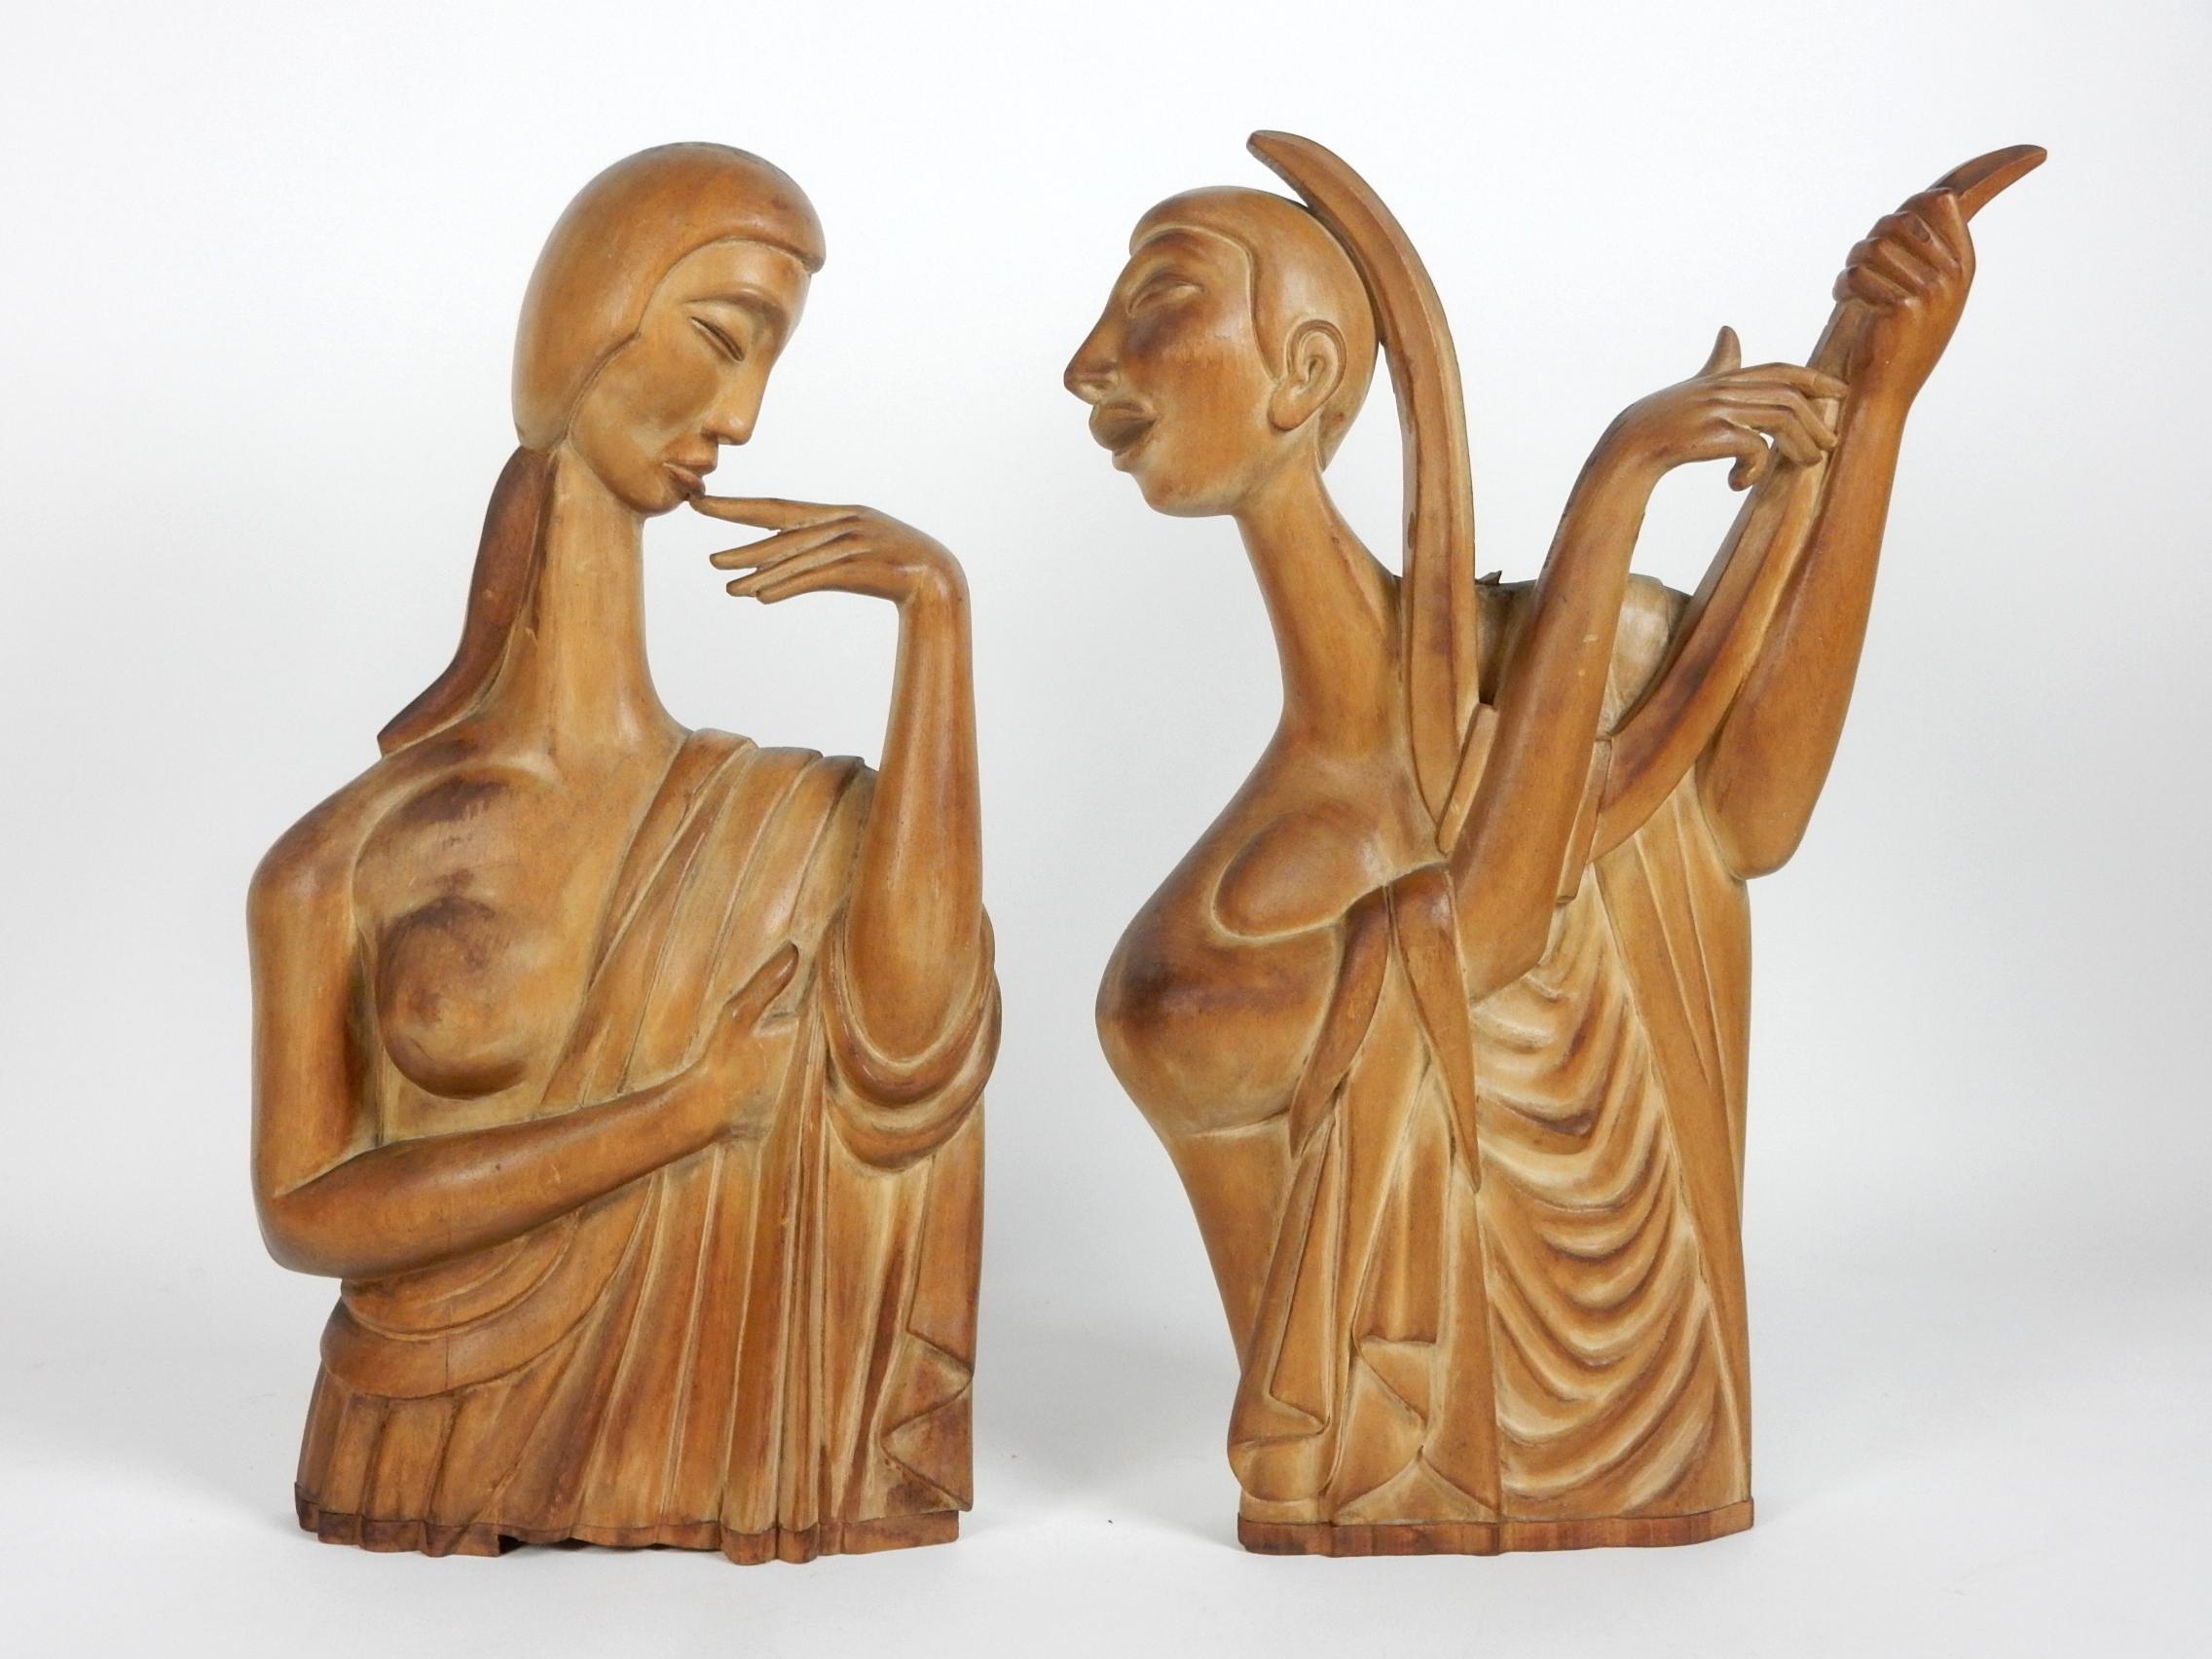 20th Century Art Deco Franz Hagenauer Style Carved Wood Sculpture